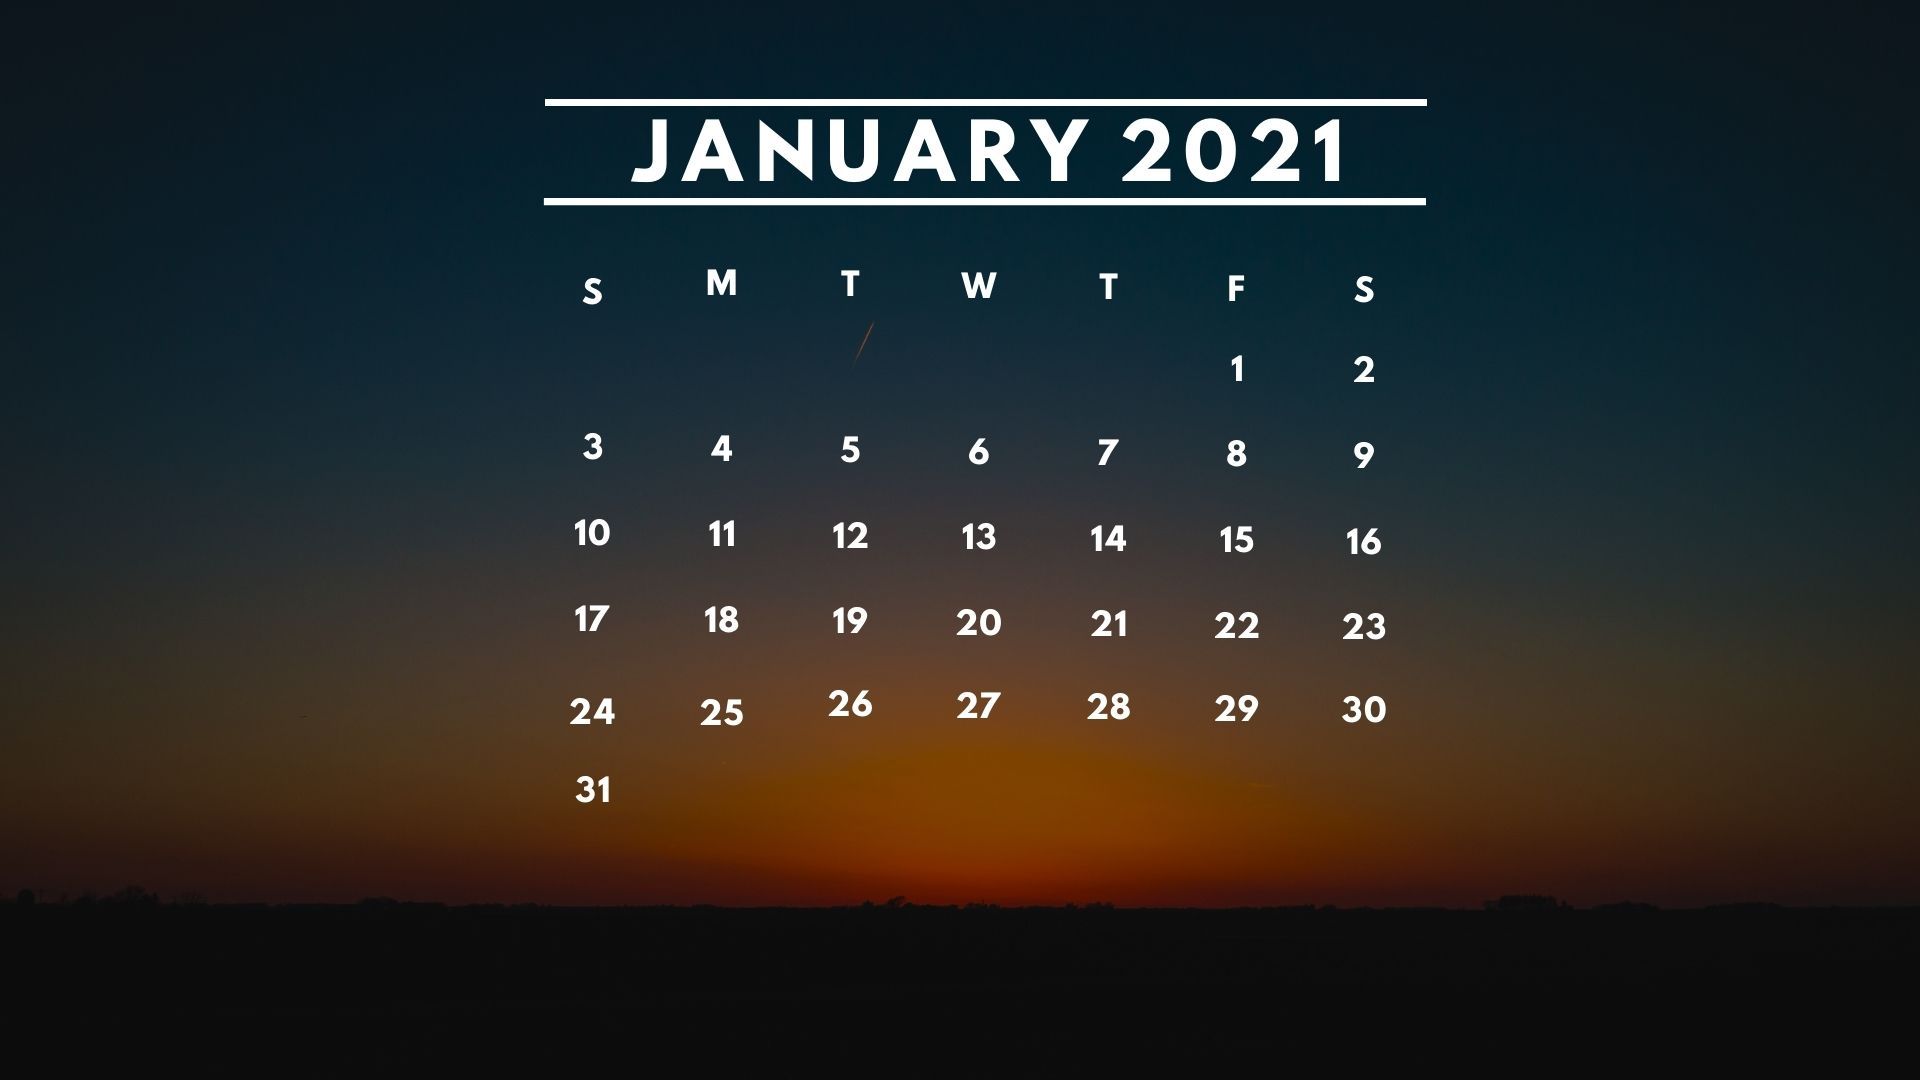 January 2021 Calendar Wallpaper Phone Image ID 6